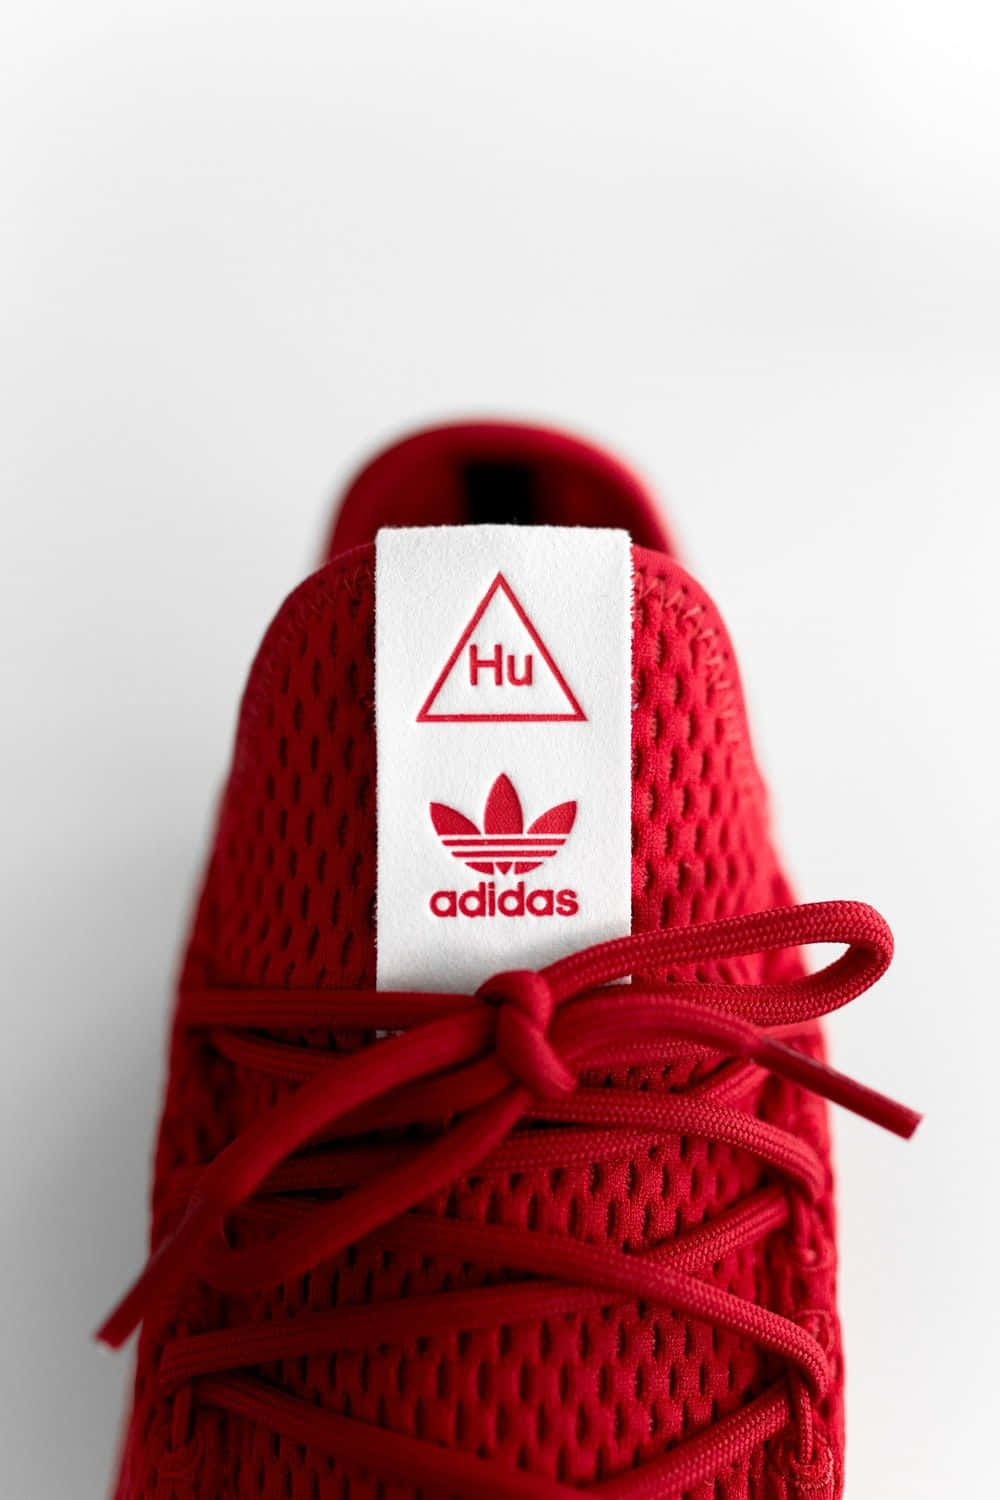 Iconic Adidas Logo On A Striking Red Background